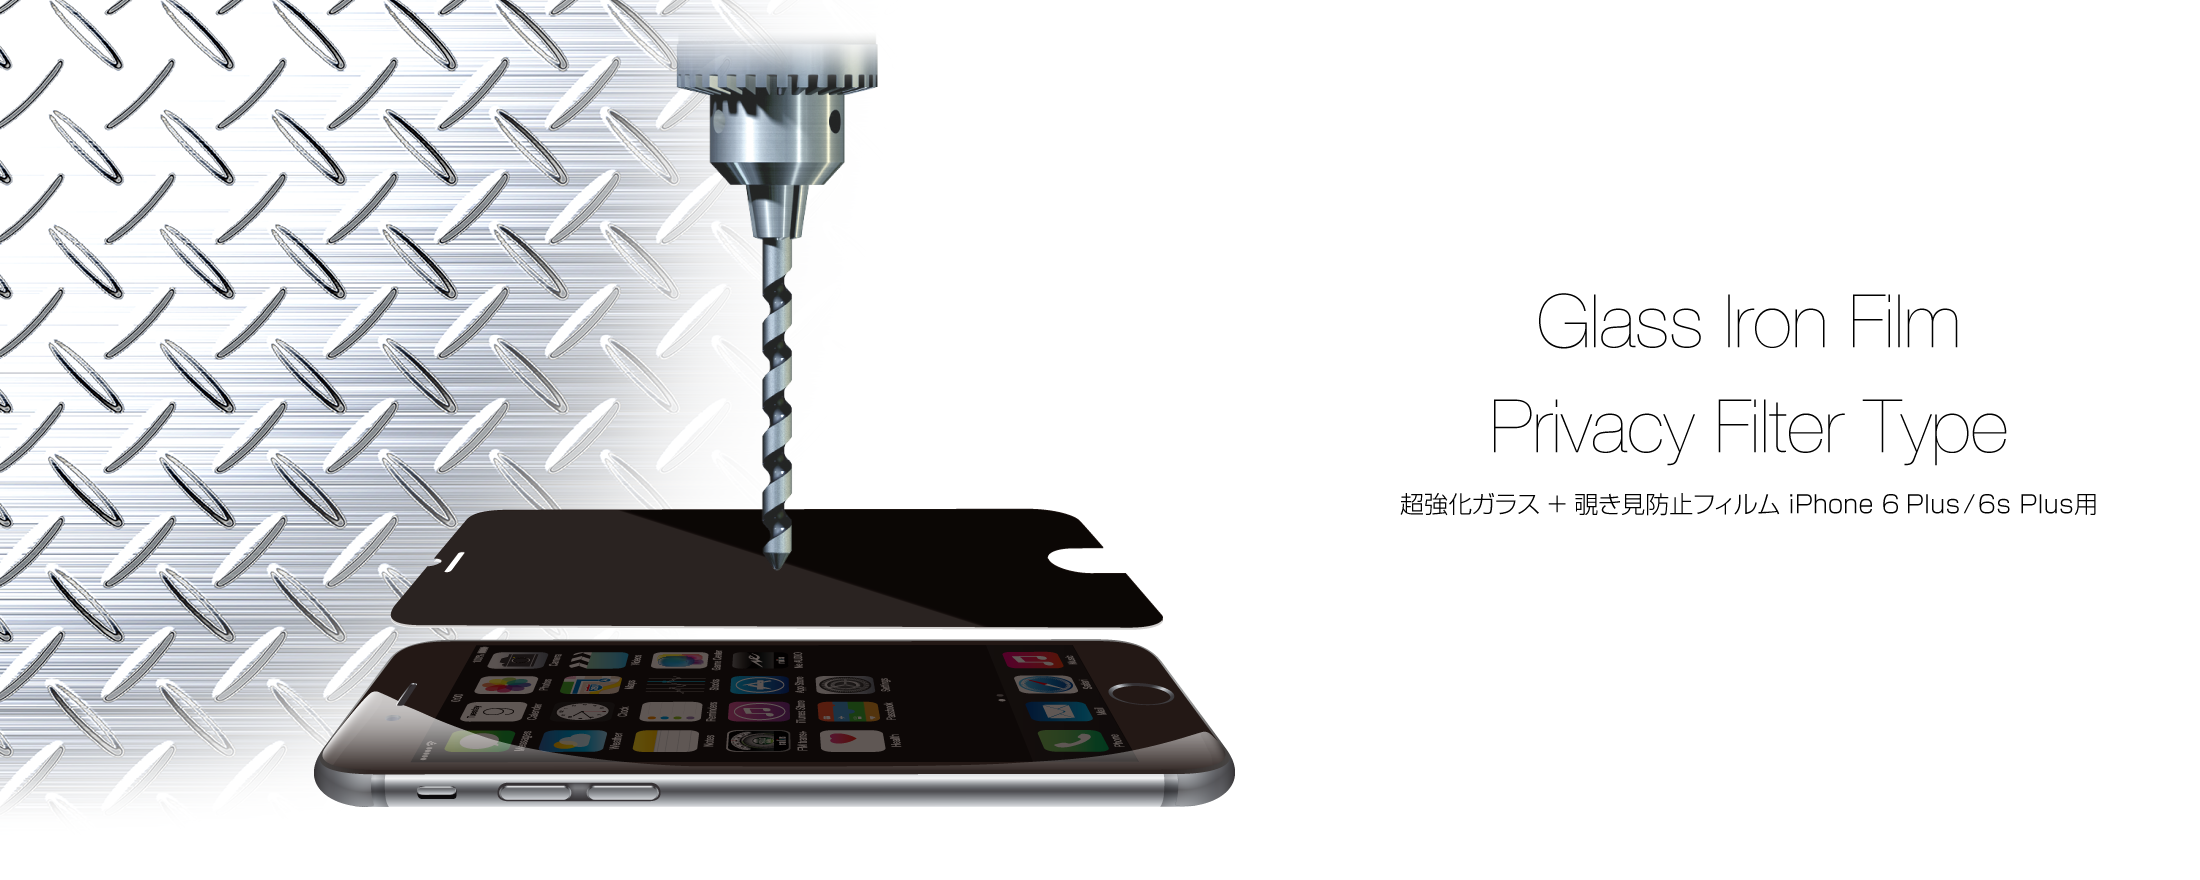 Rk Pga13 超強化ガラス 覗き見防止フィルム Iphone 6 Plus 6s Plus用 Radius ラディウス株式会社 オーディオ デジタル音響機器 Lightning製品メーカー